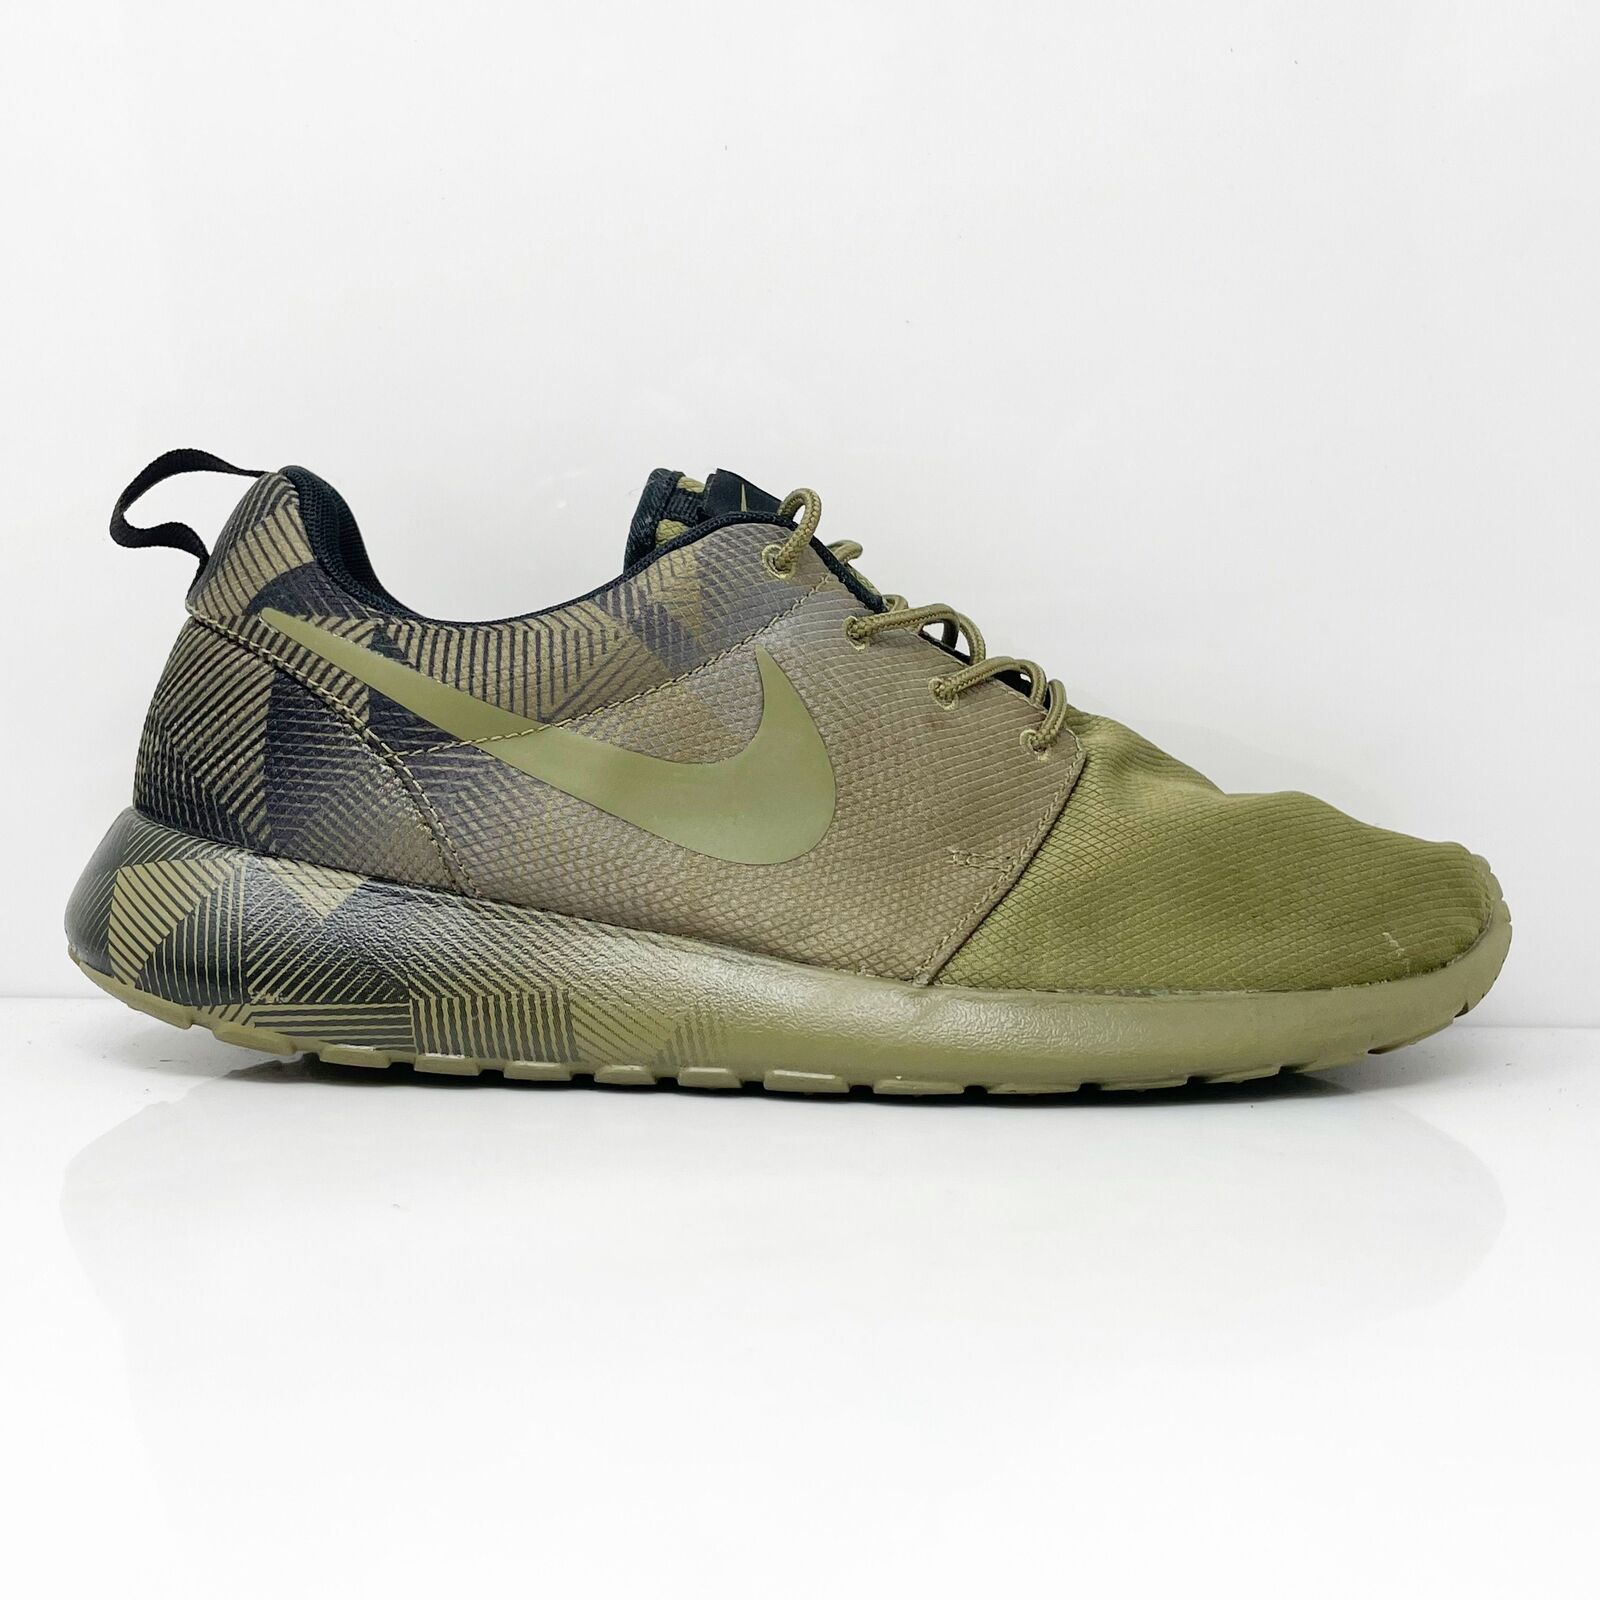 Nike Mens Roshe Run Print 655206-220 Green Running Shoes Sneakers Size 10.5